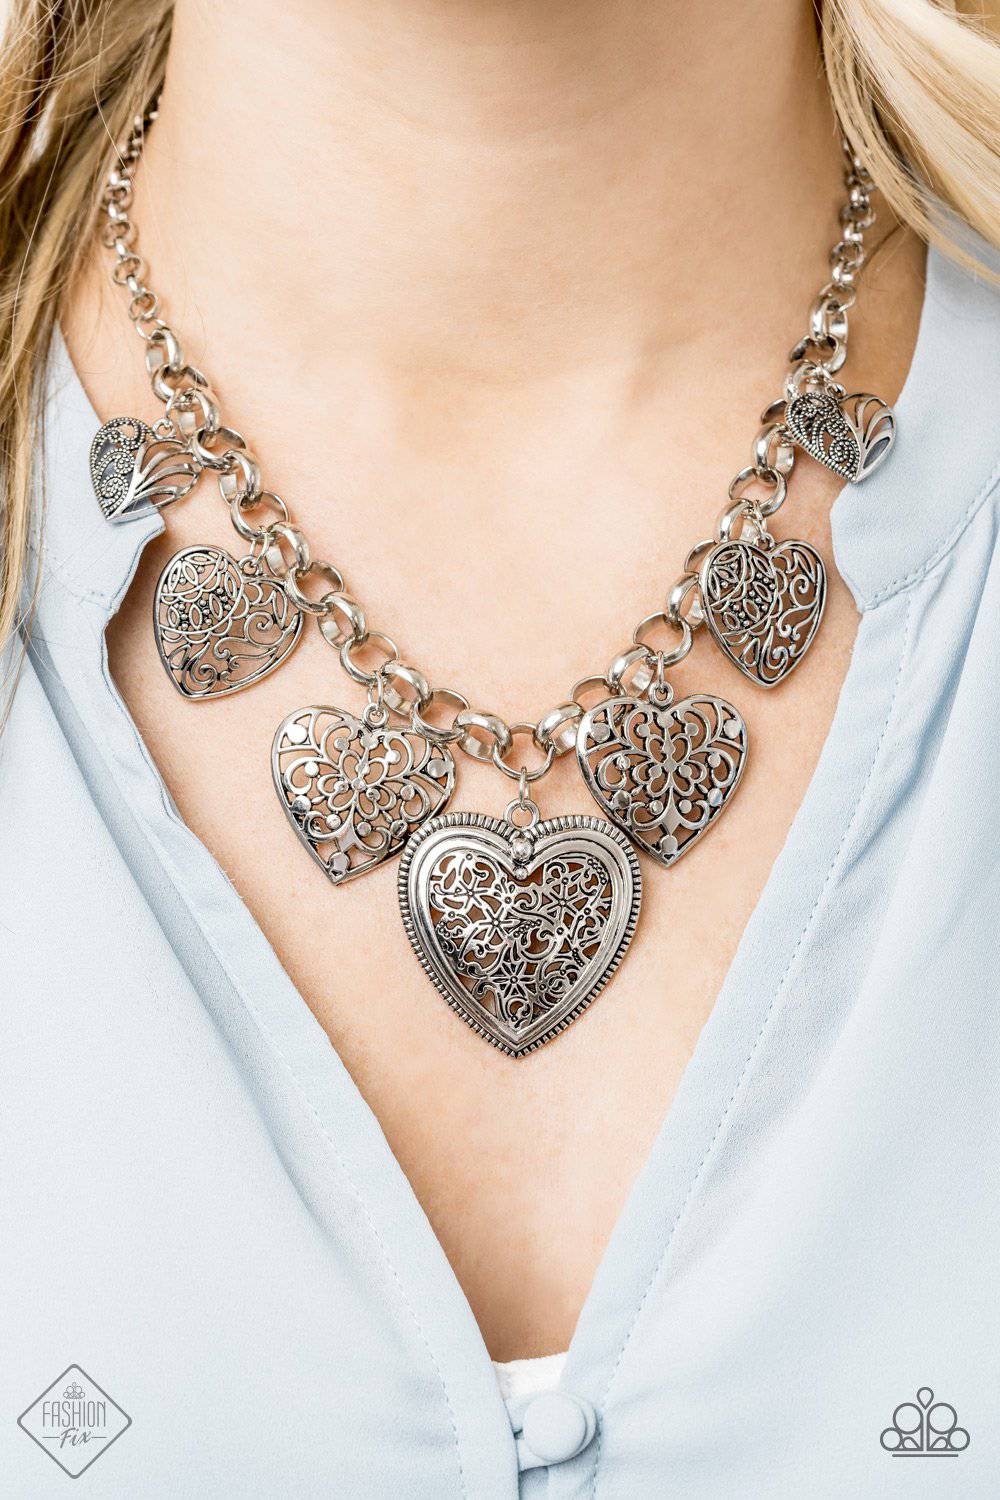 August 2019 Fashion Fix Glimpses of Malibu - Complete Trend Blend - GlaMarous Titi Jewels